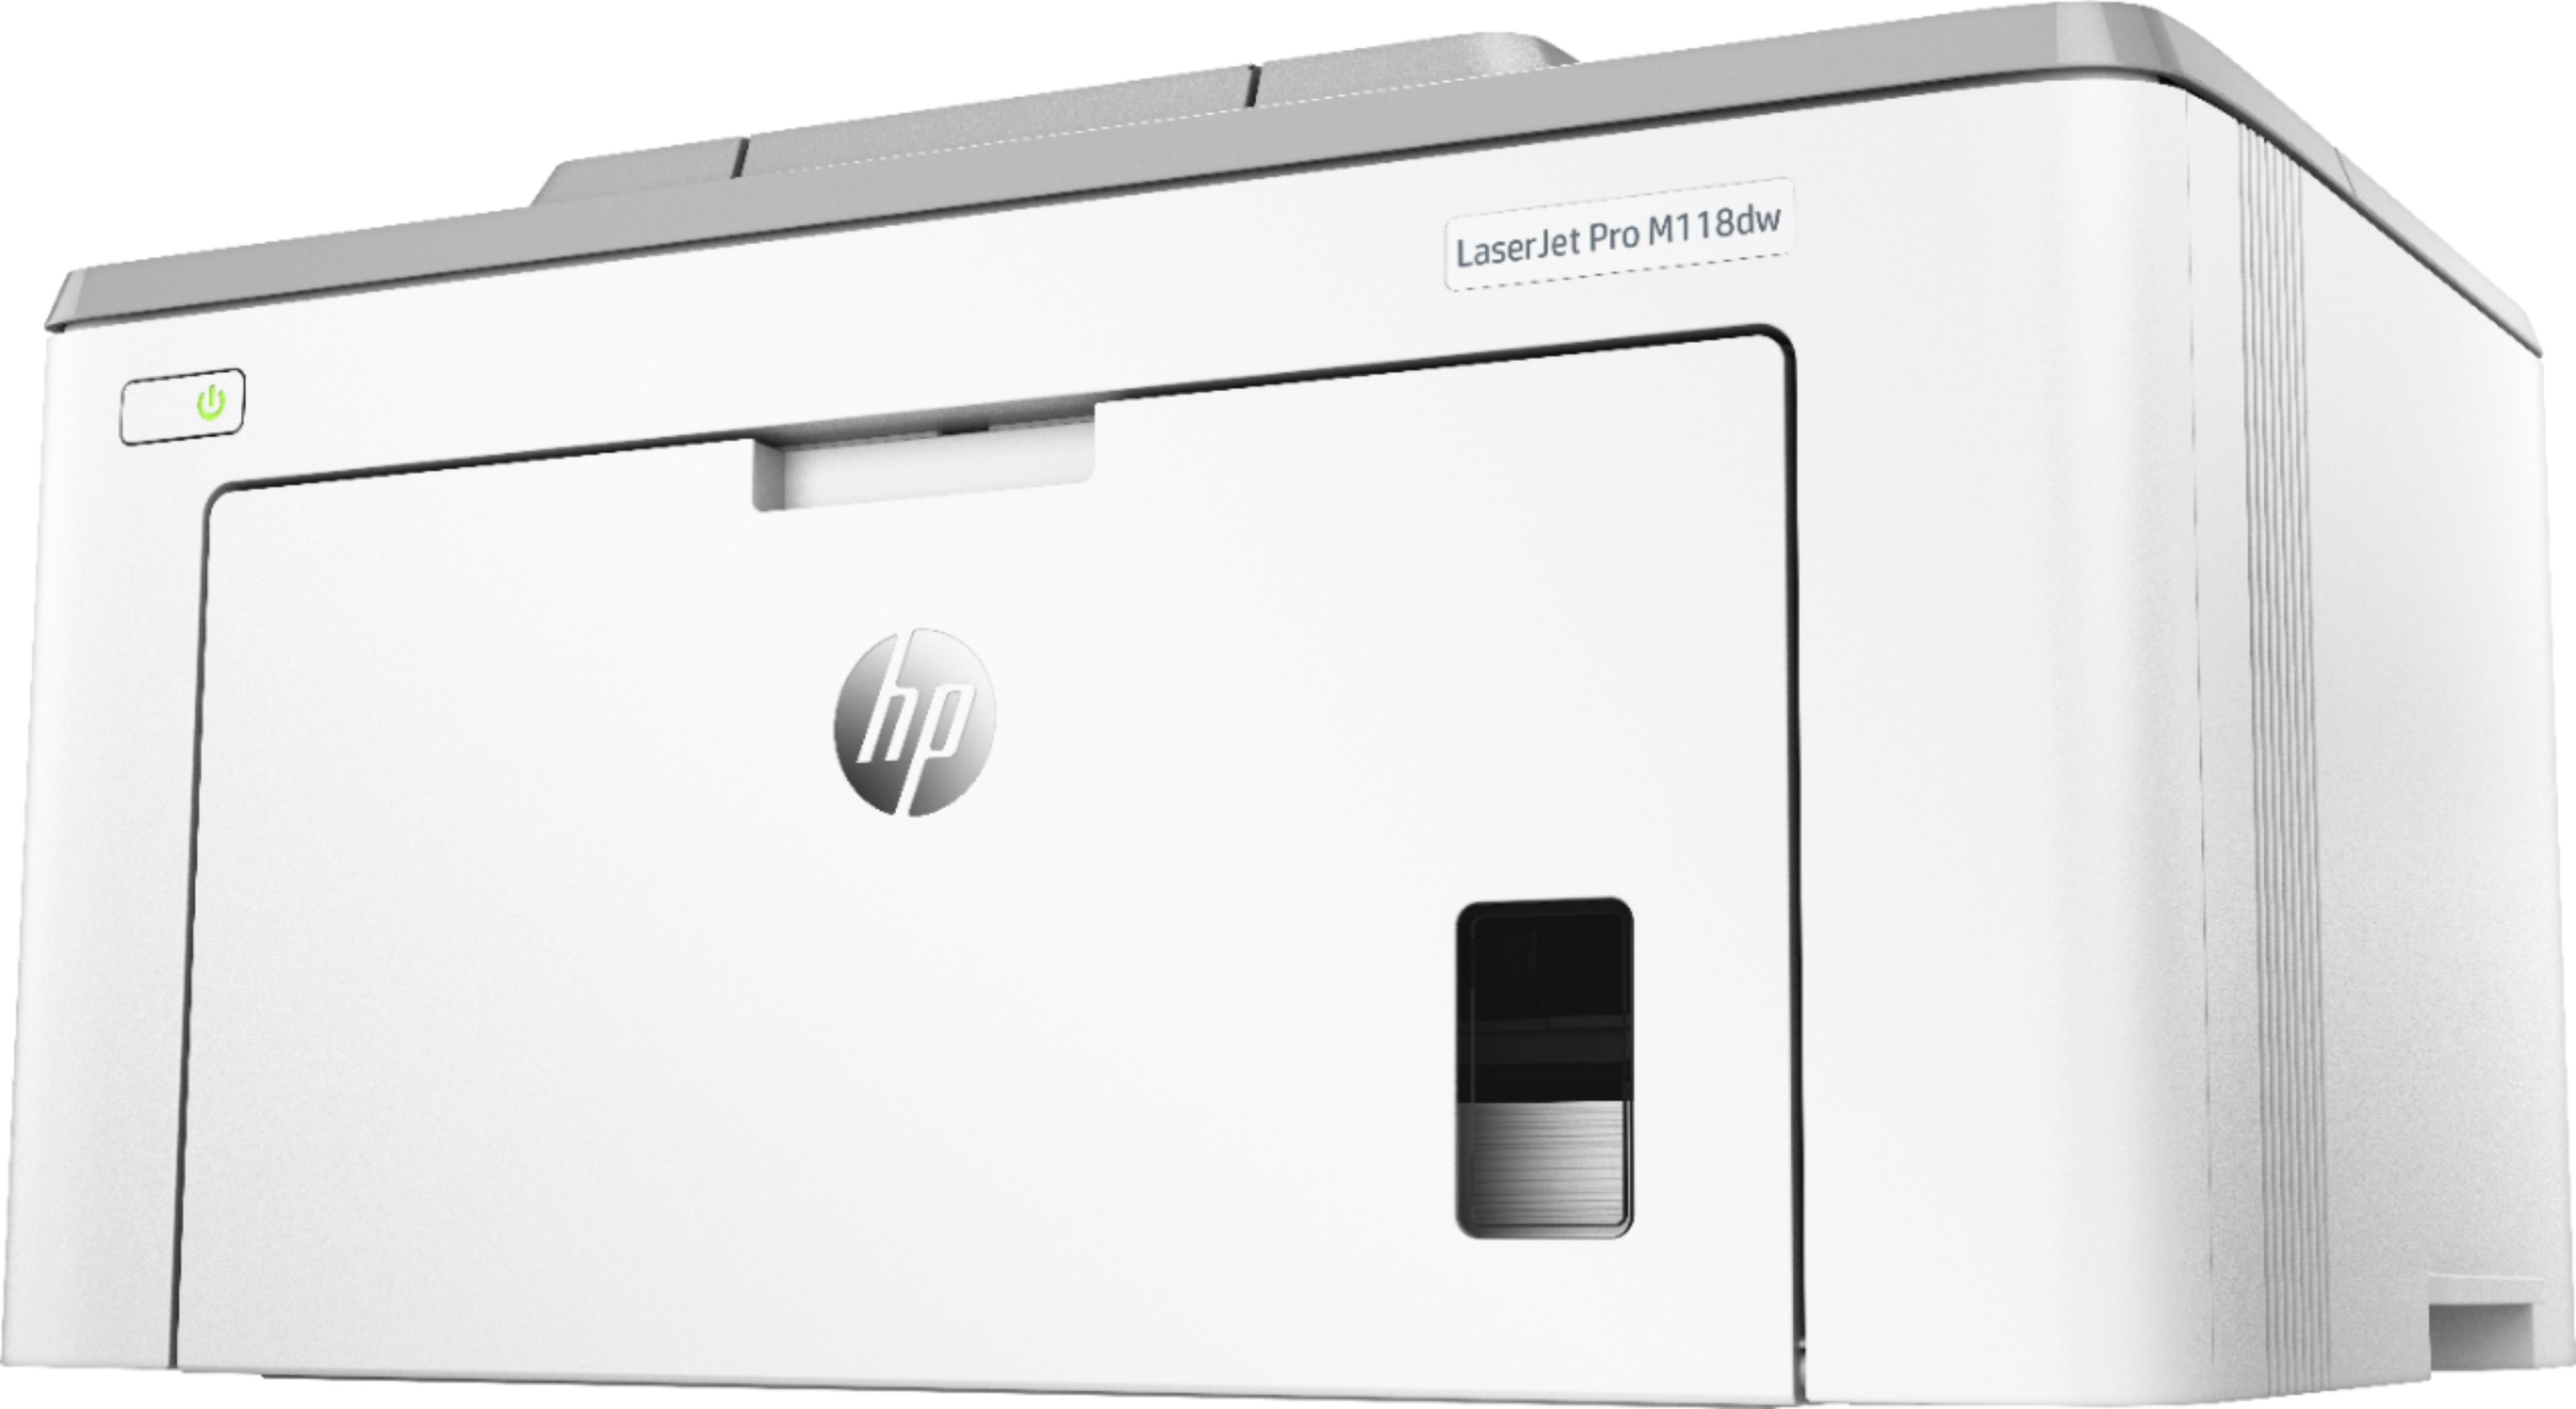 Off-White And Gray HP LaserJet Pro M118DW Wireless Black-and-White Printer